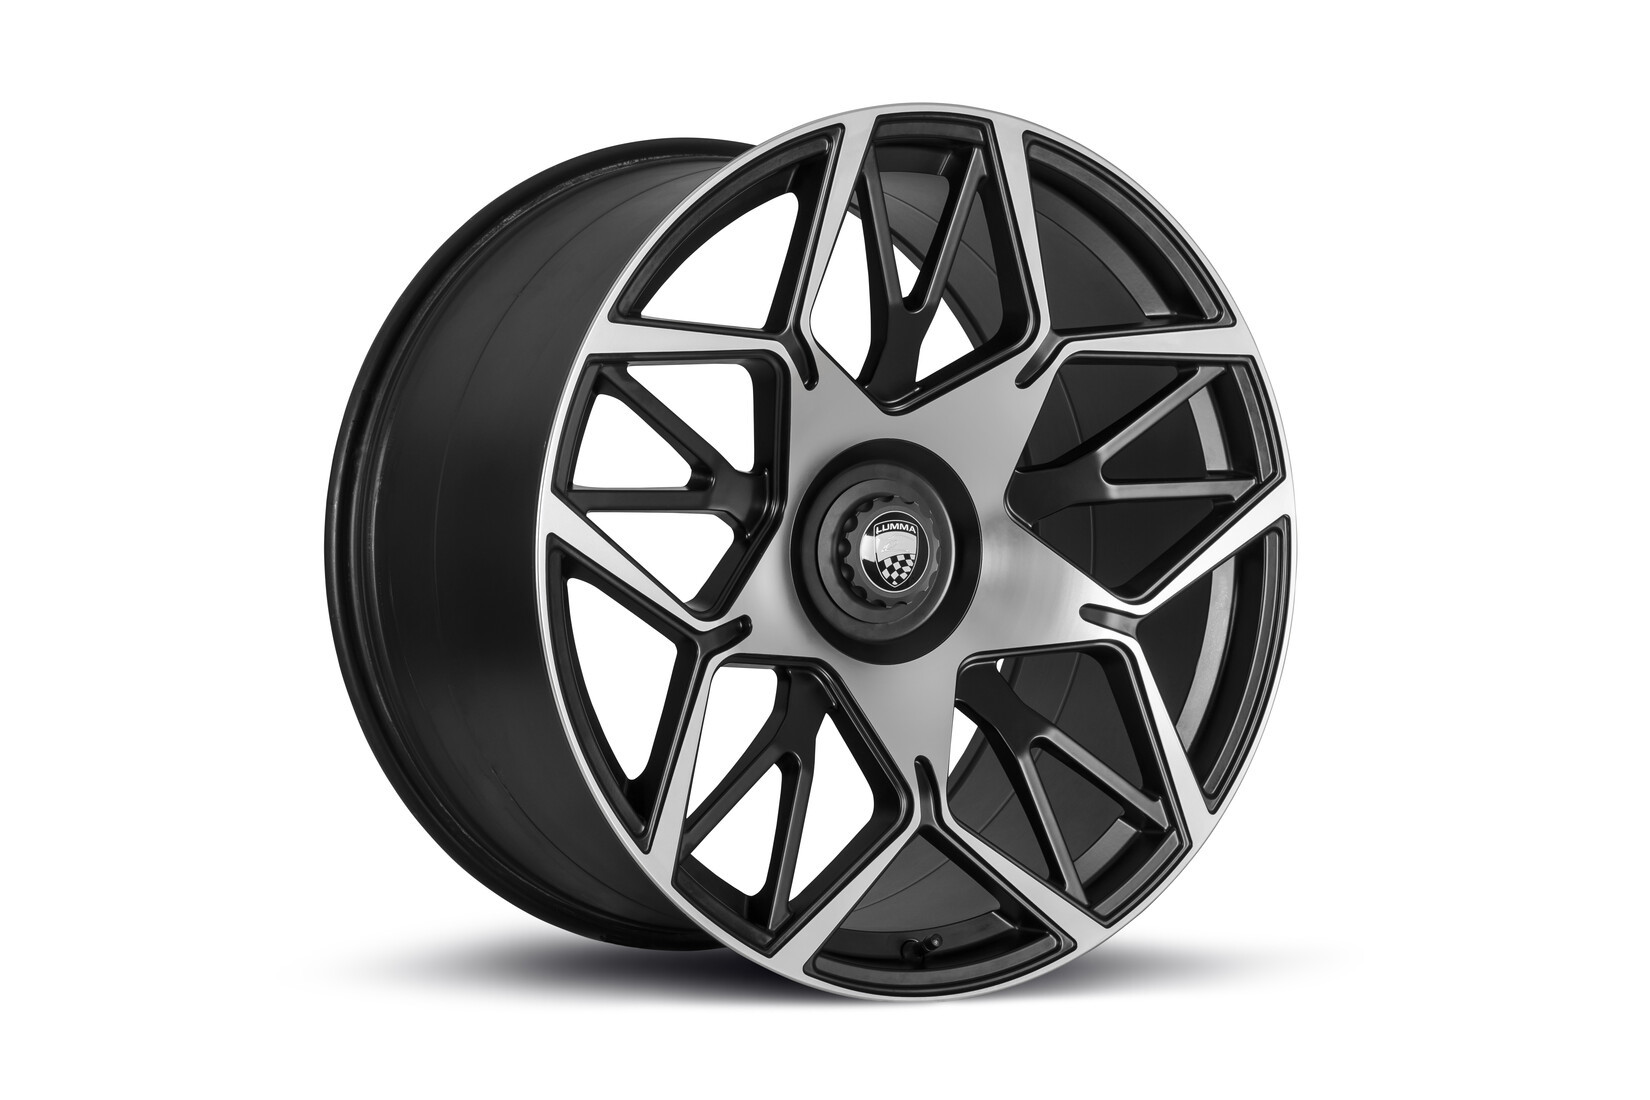 LUMMA CLR LN 1 BLACK/FRONT POLISHED 2020 Forged Wheels